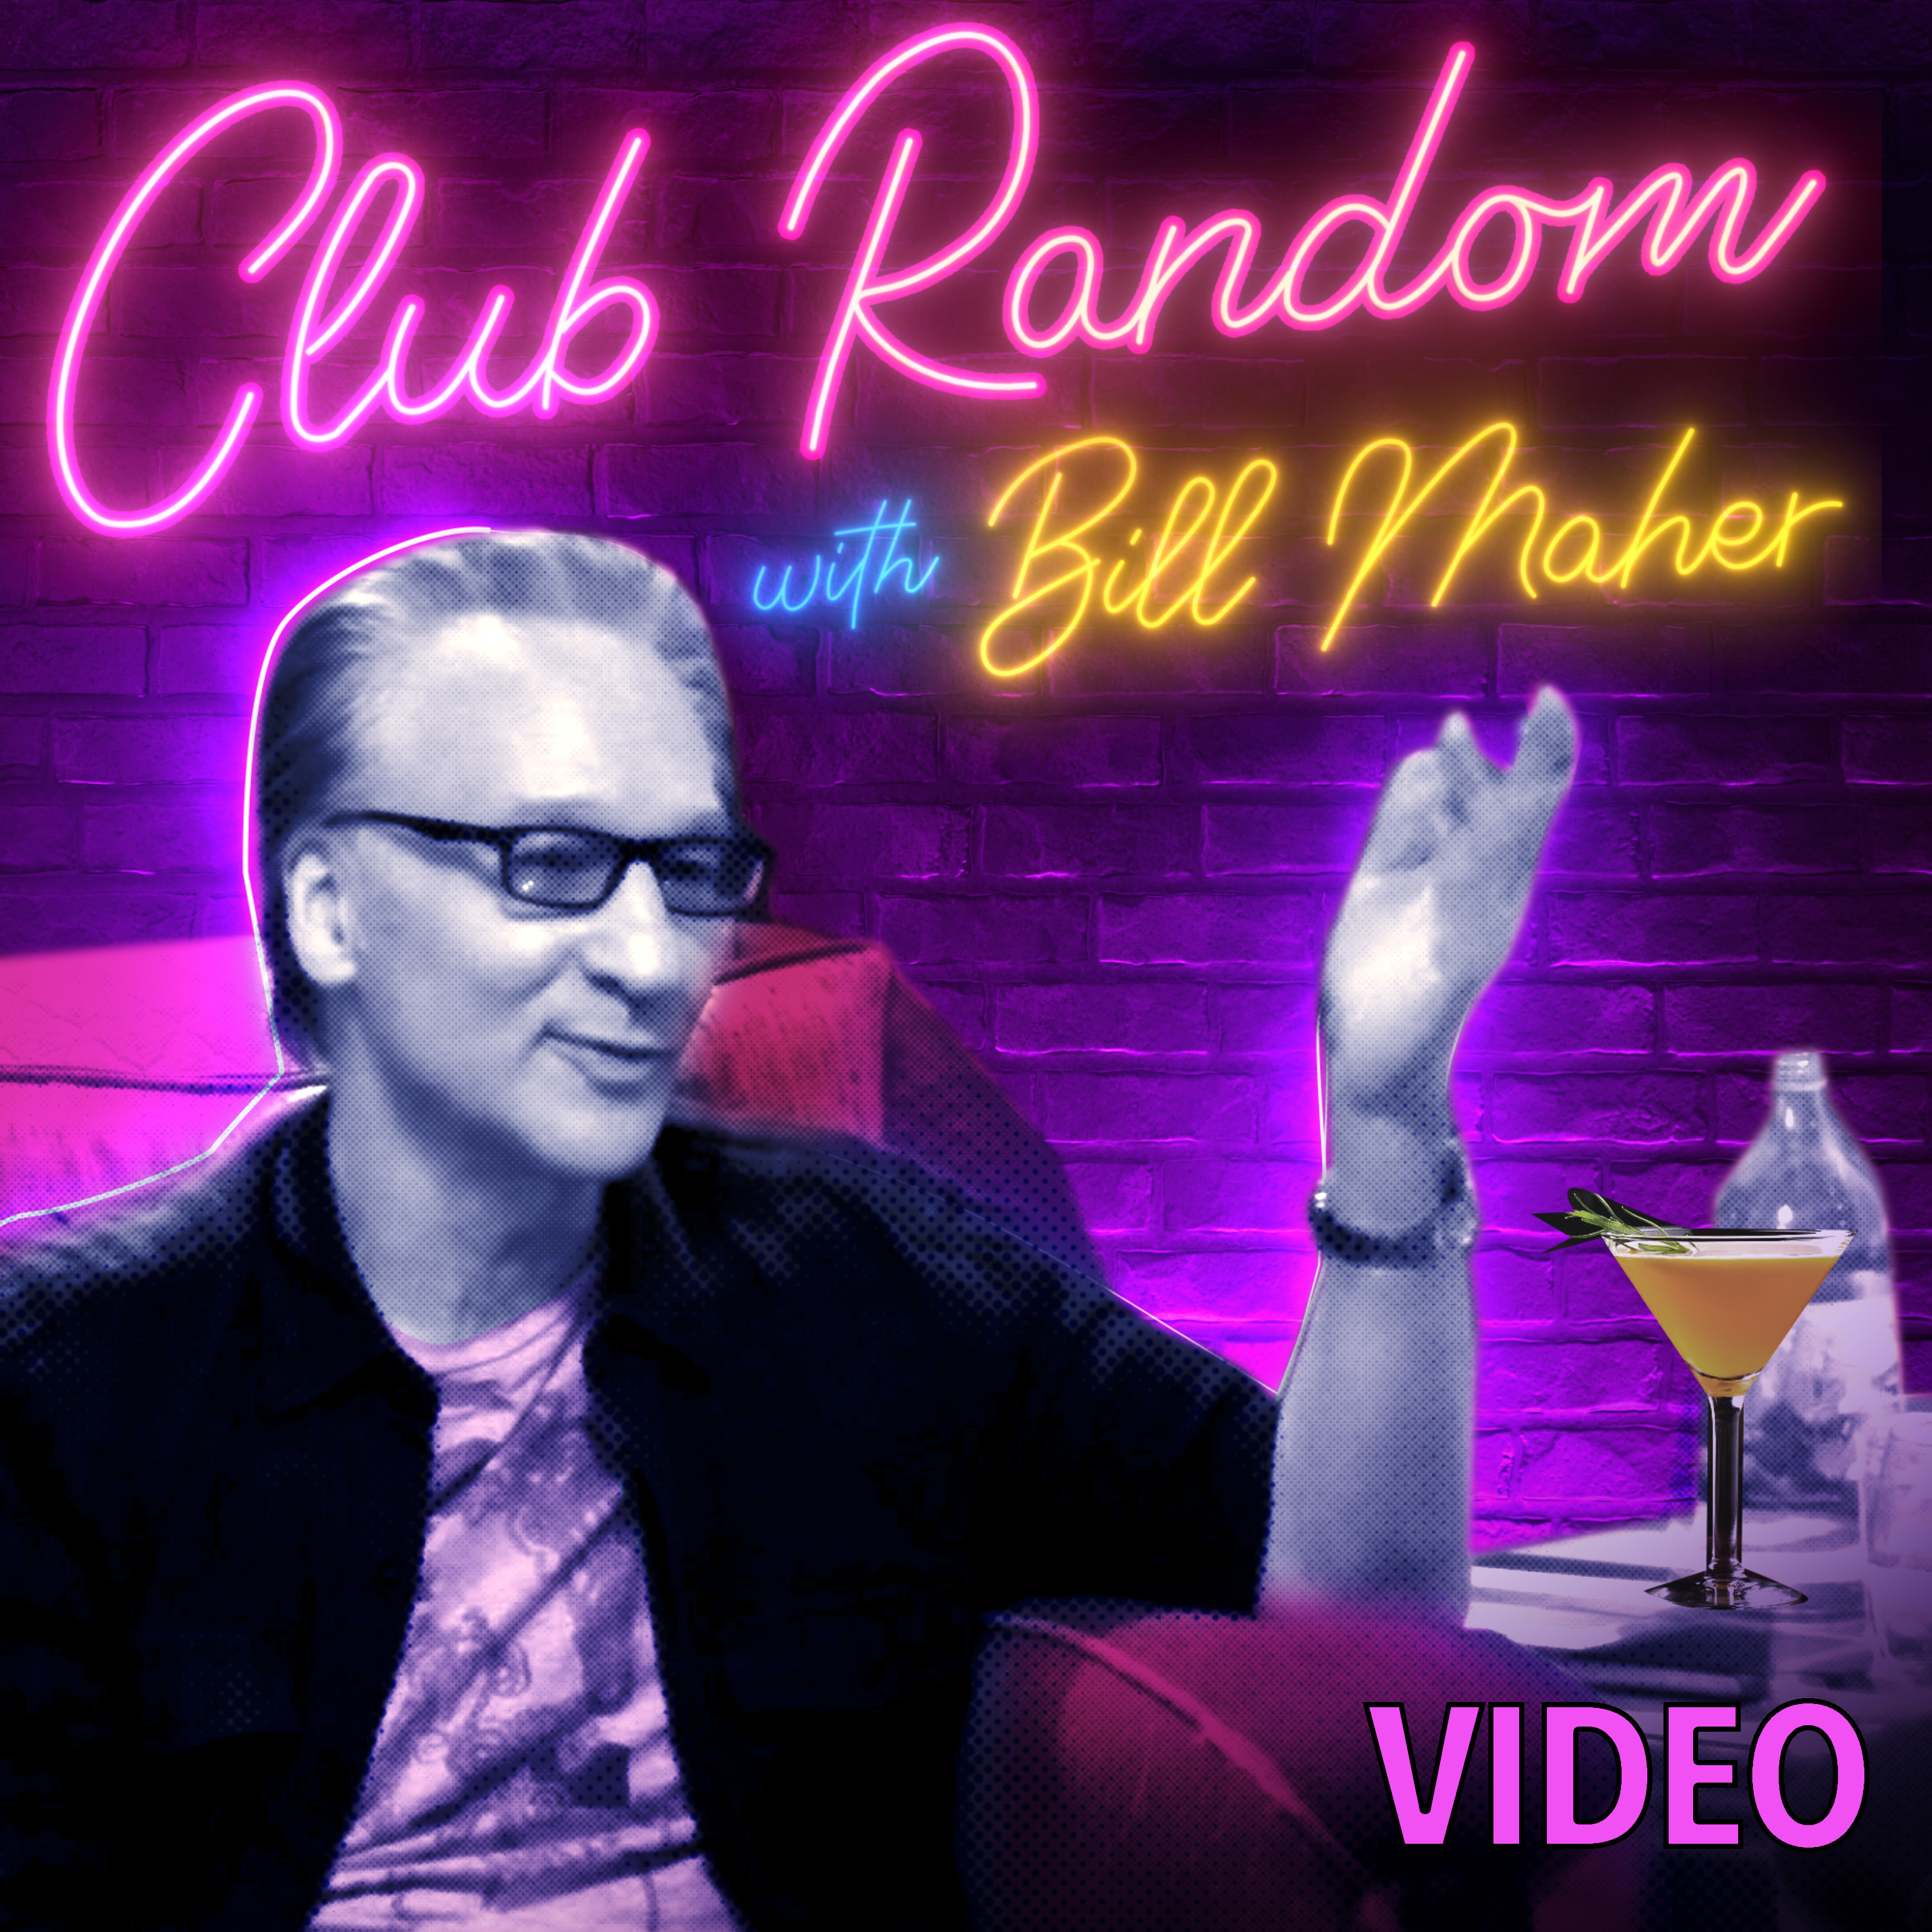 Video: Roseanne | Club Random with Bill Maher